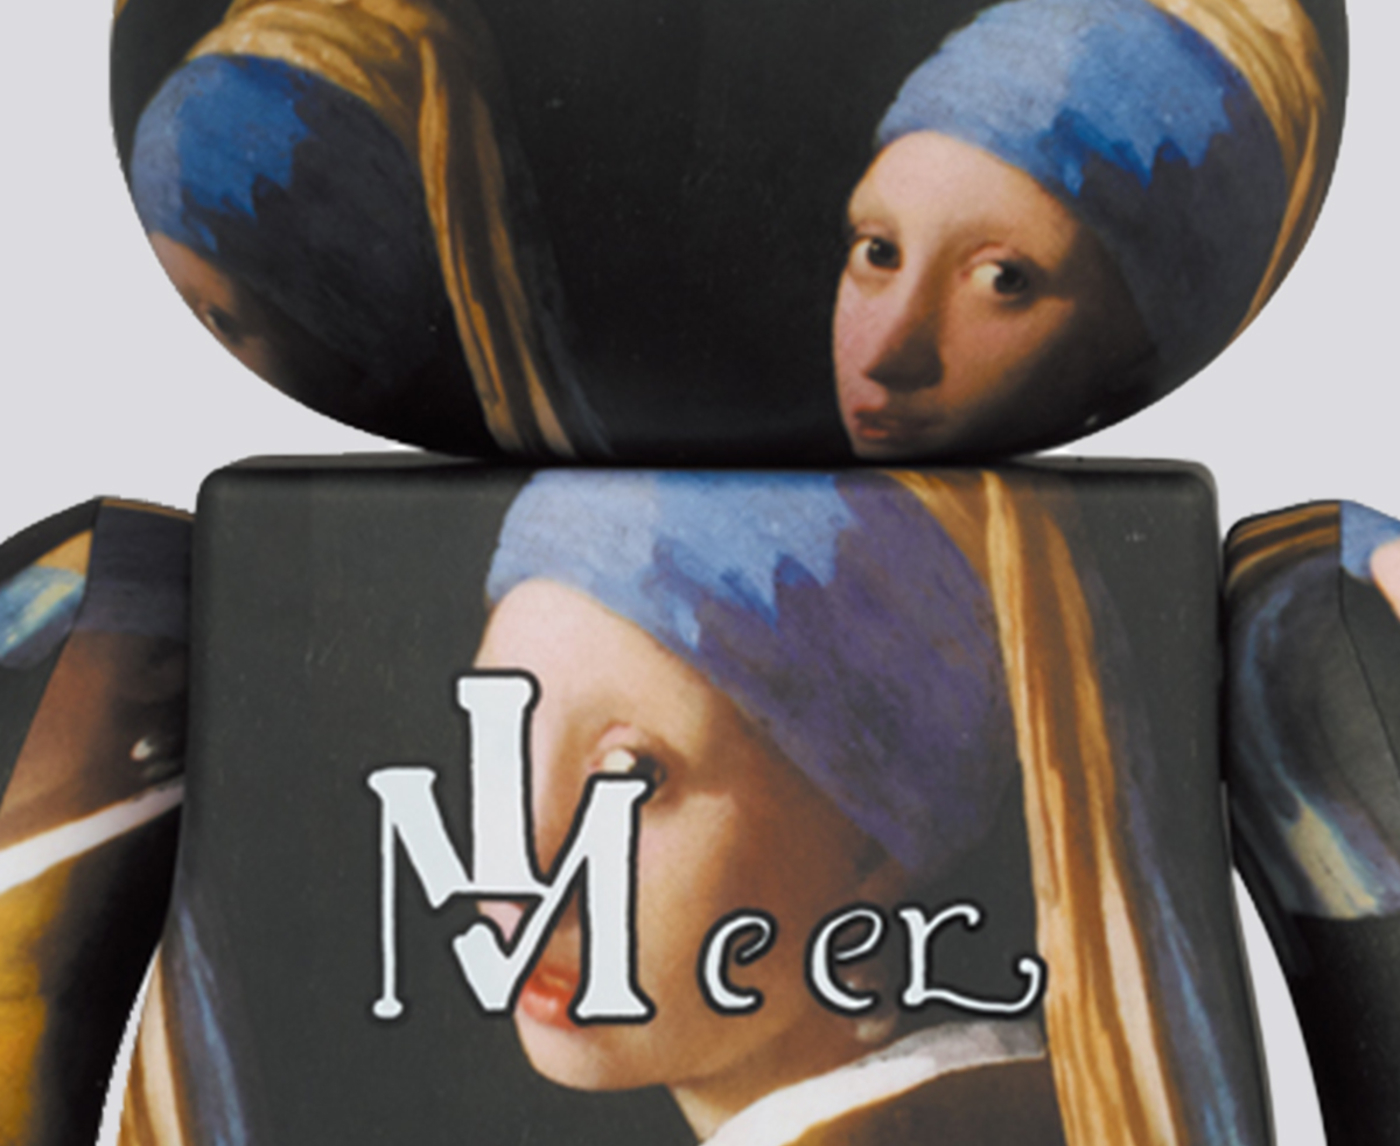 Bearbrick Johannes Vermeer (Girl with a Pearl Earring) 1000%